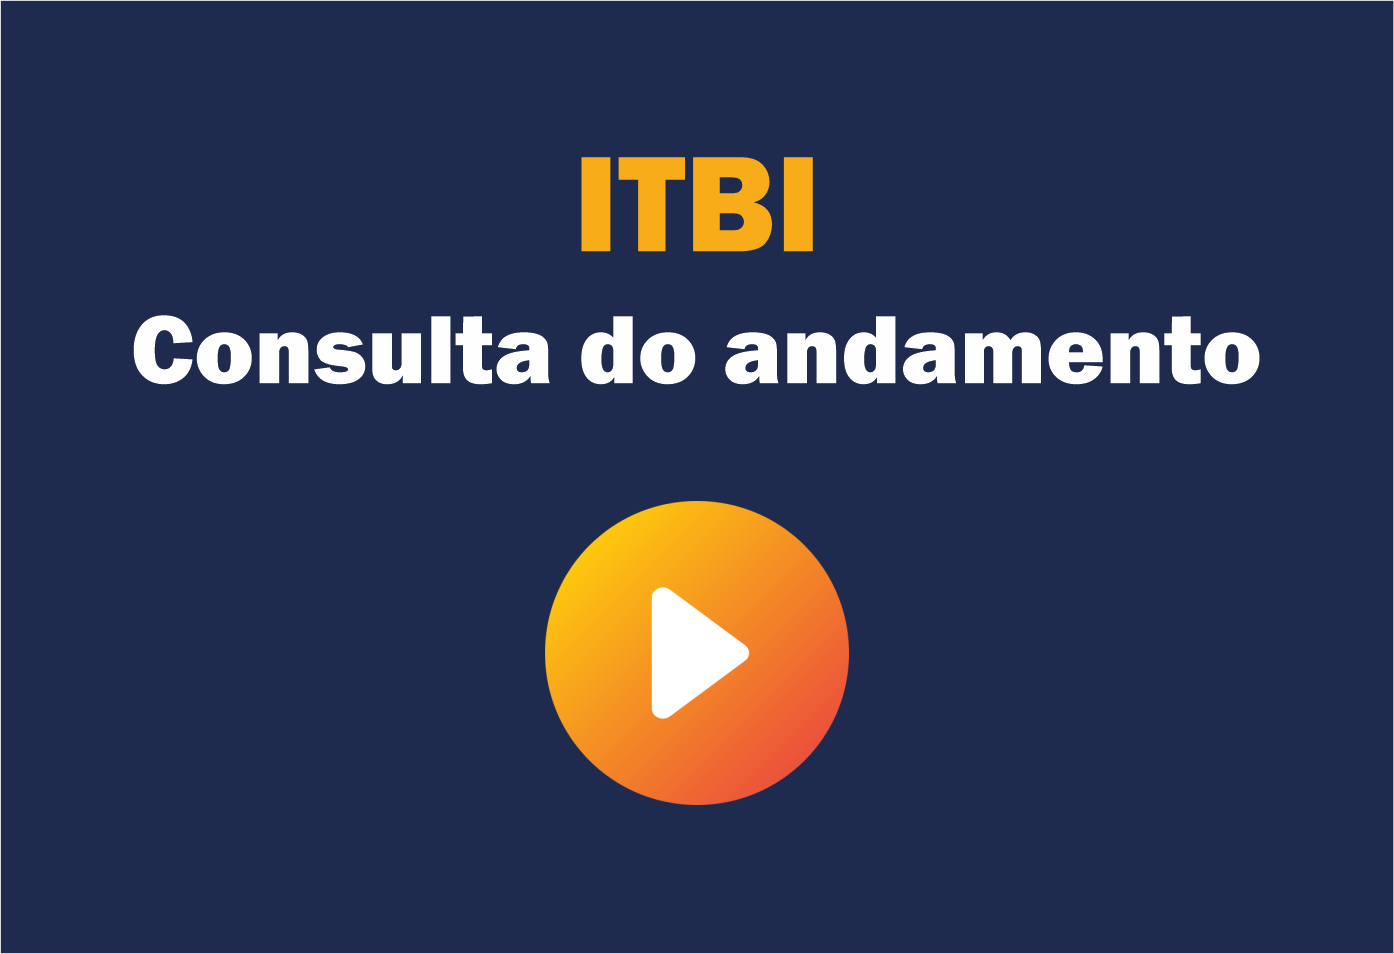 ITBI - CONSULTA DO ANDAMENTO